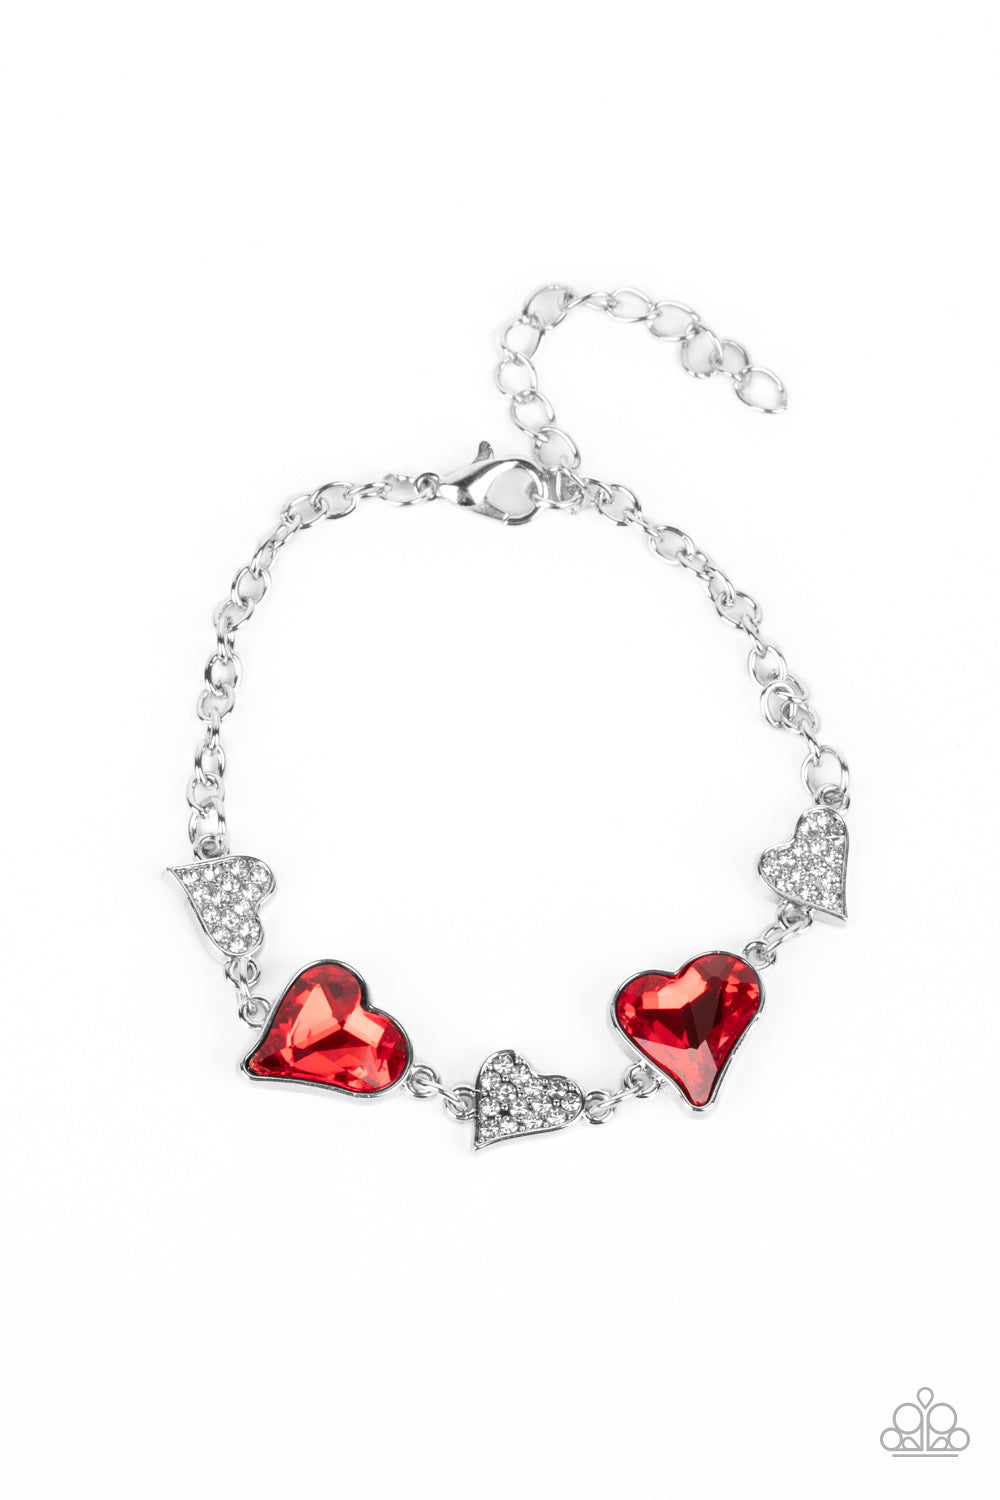 Paparazzi Cluelessly Crushing - Red Heart Bracelet -Paparazzi Jewelry Images 